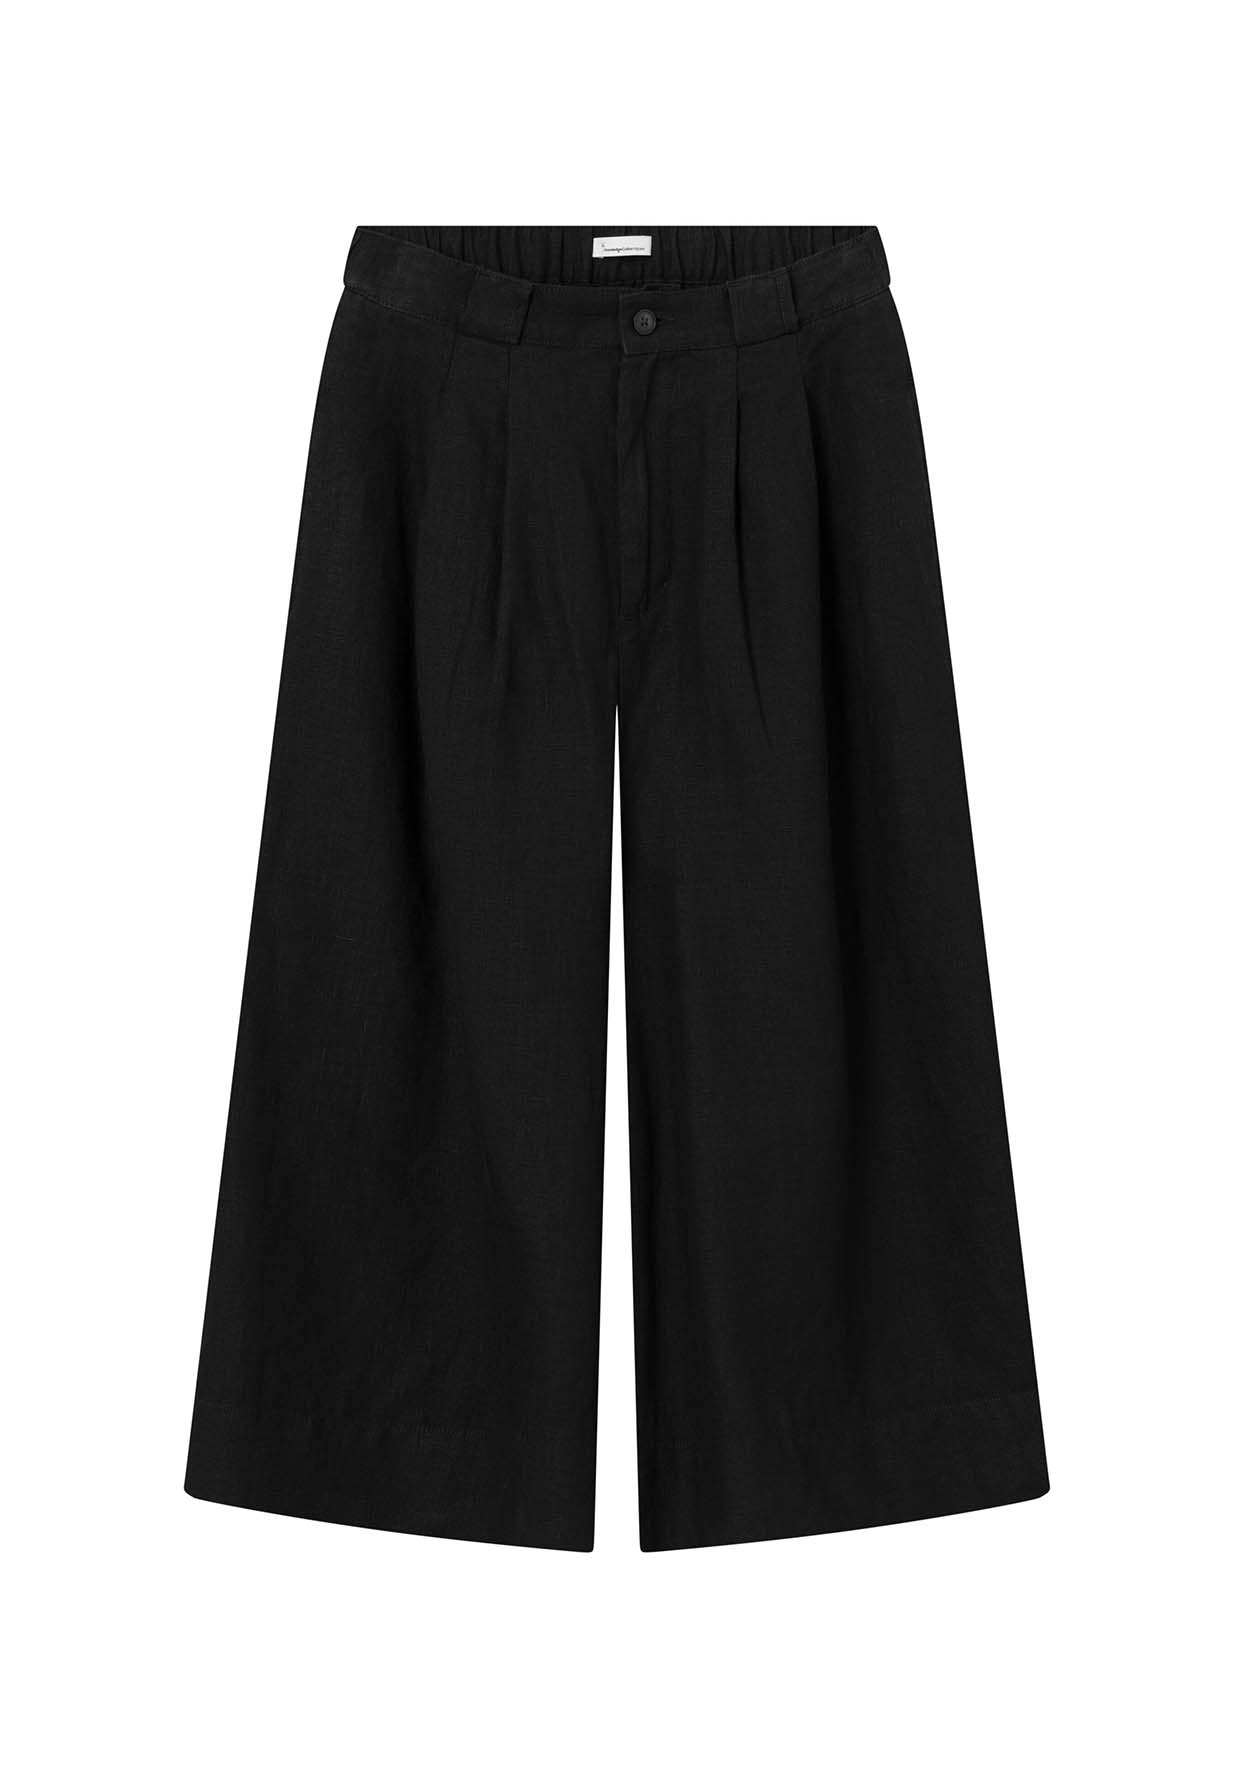 KNOWLEDGECOTTON APPAREL Natural Linen Baggy Shorts black jet XXL